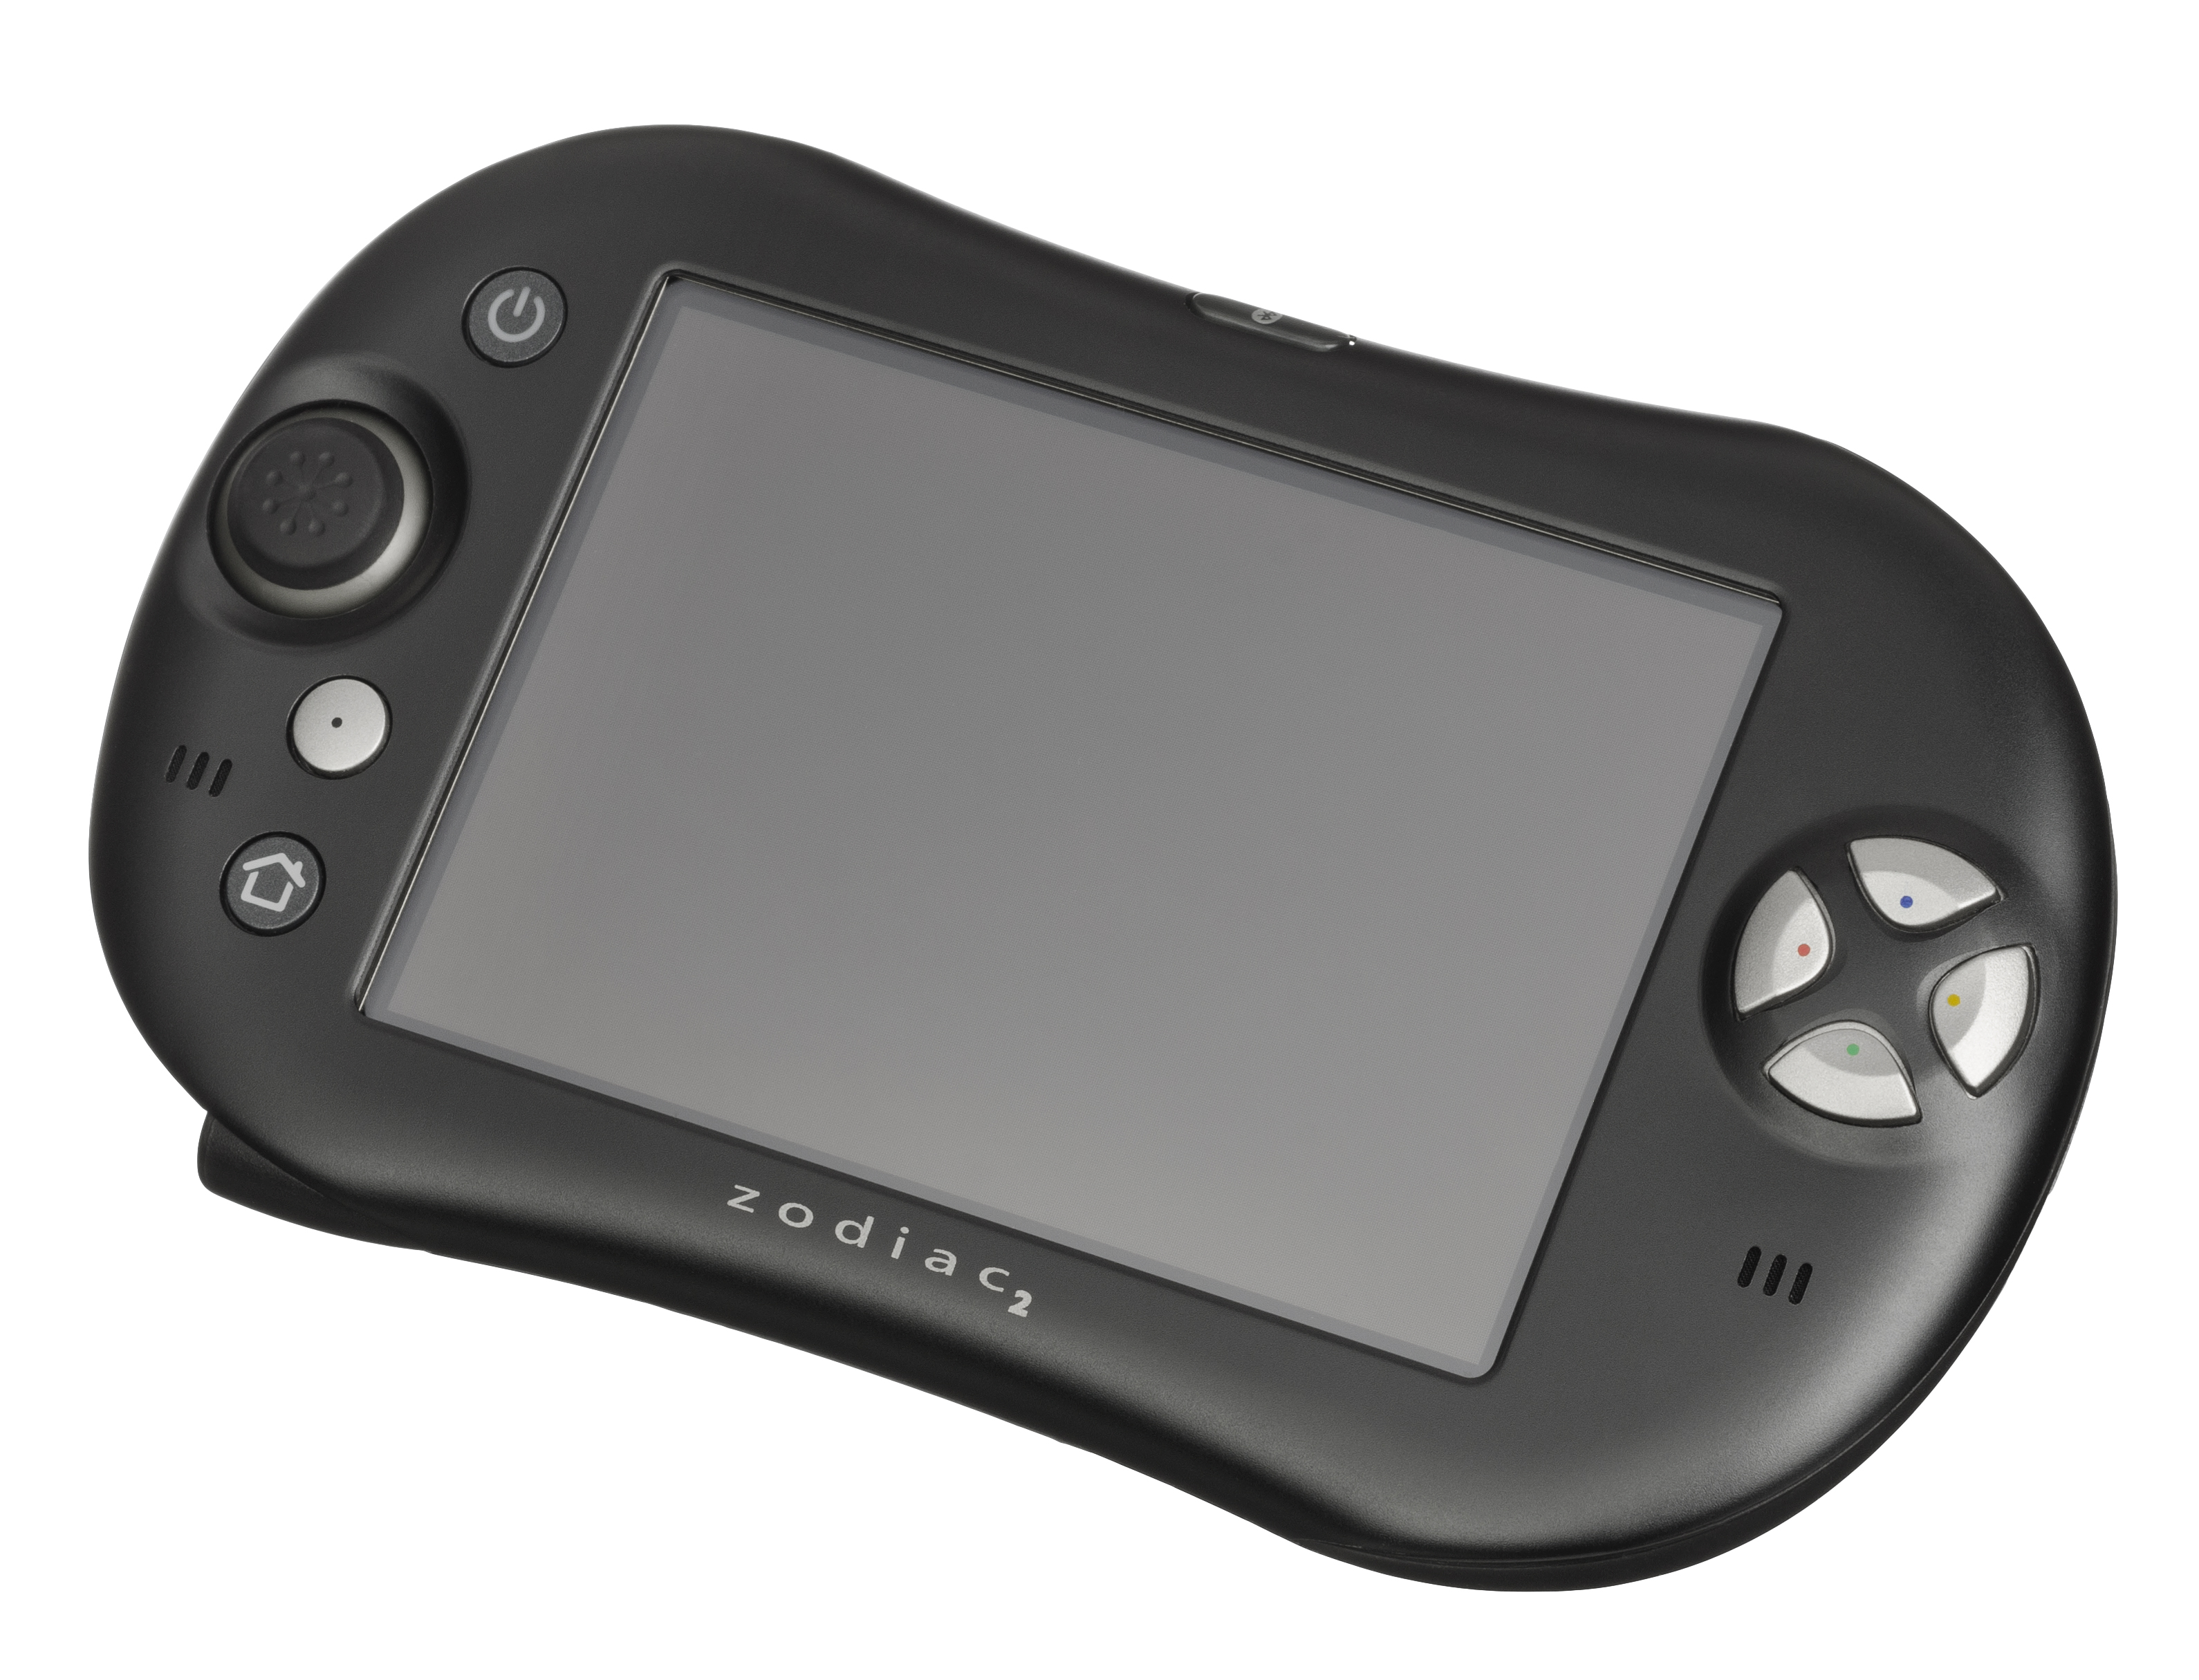 MTX Mototrax ROM - PSP Download - Emulator Games